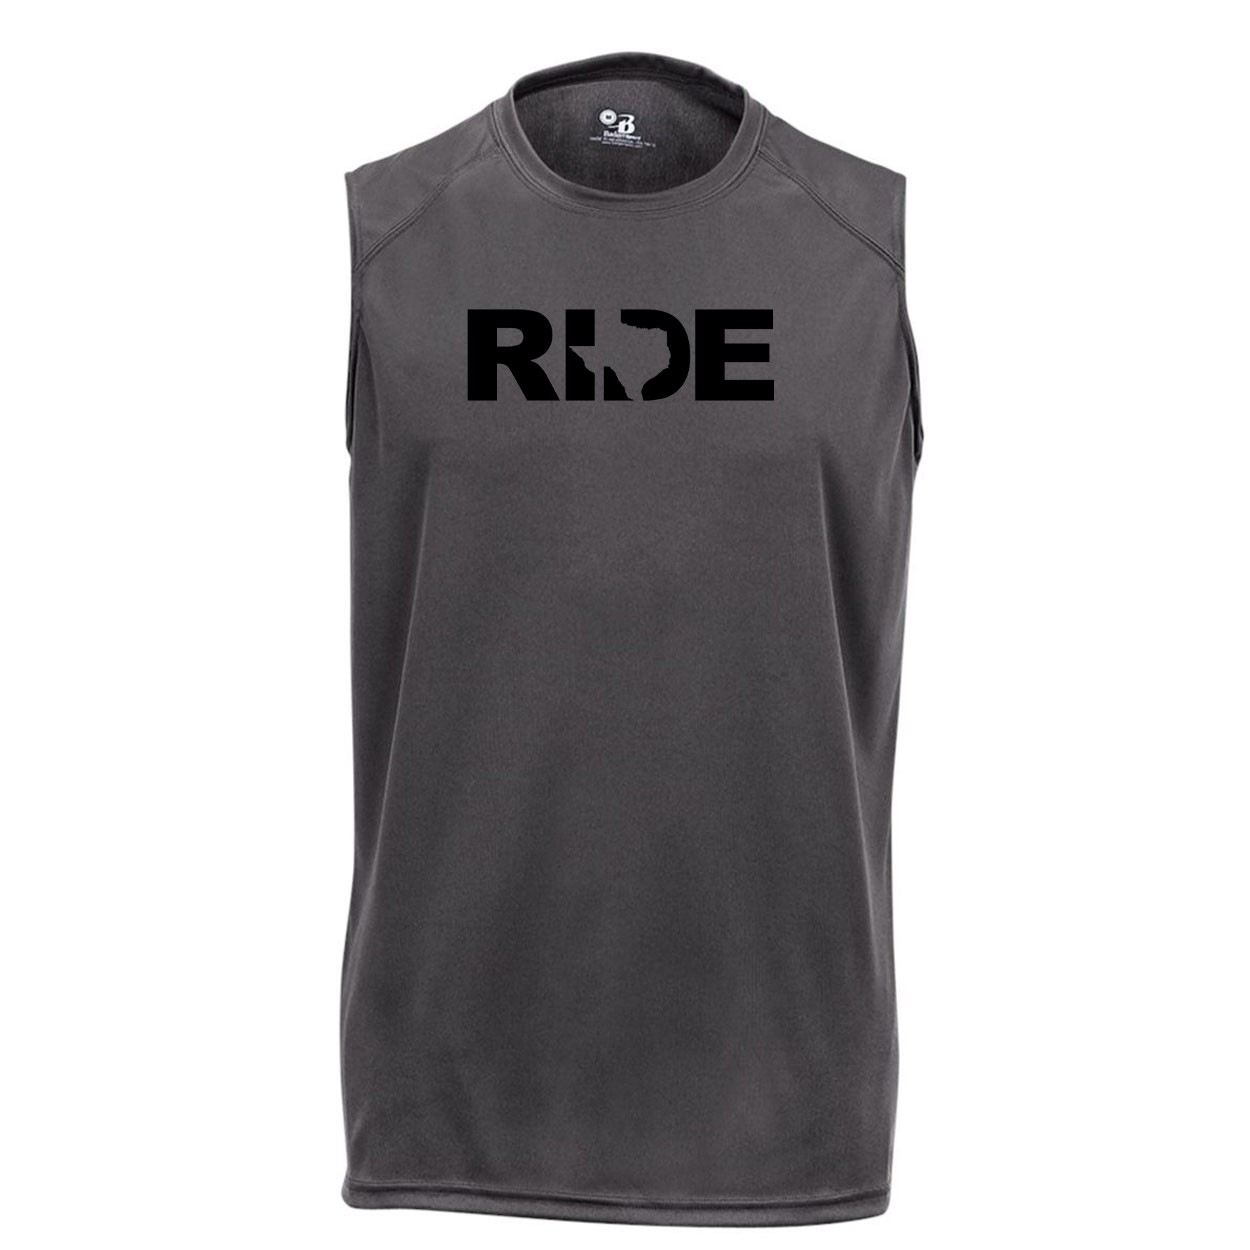 Ride Texas Classic Unisex Performance Sleeveless T-Shirt Graphite Gray (Black Logo)